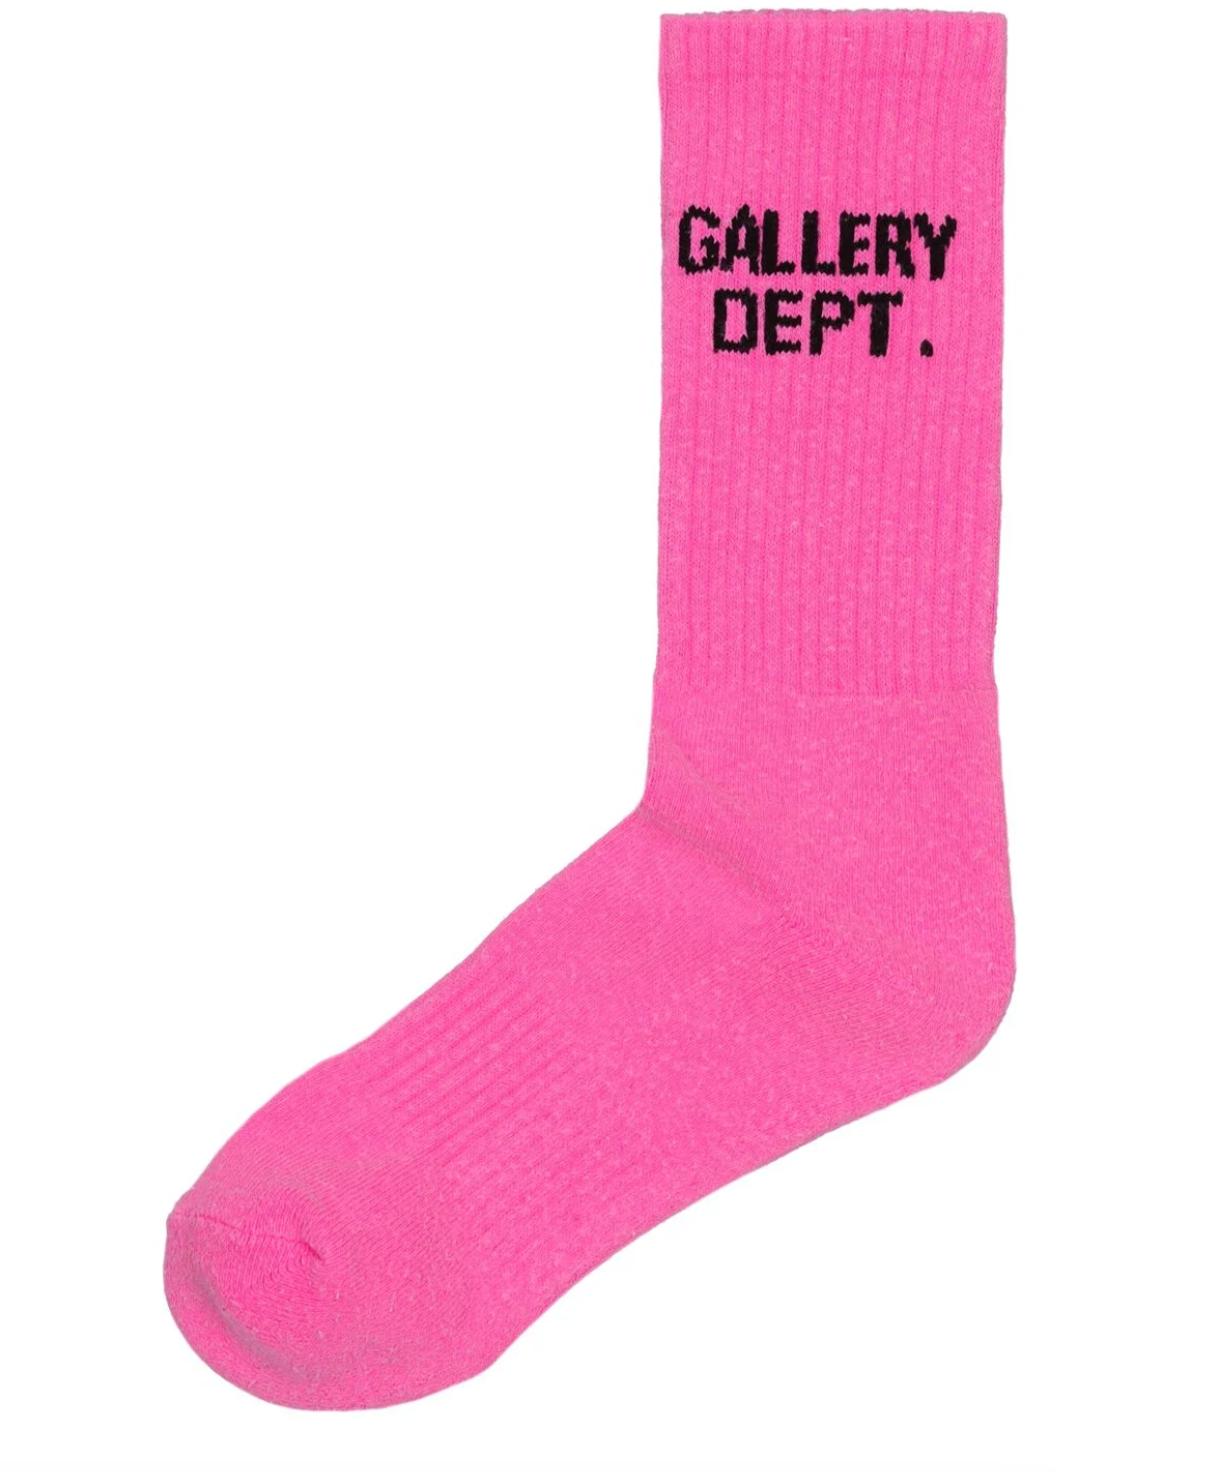 Gallery Dept. Logo Cotton Blend Socks Front Lodz Polska 2